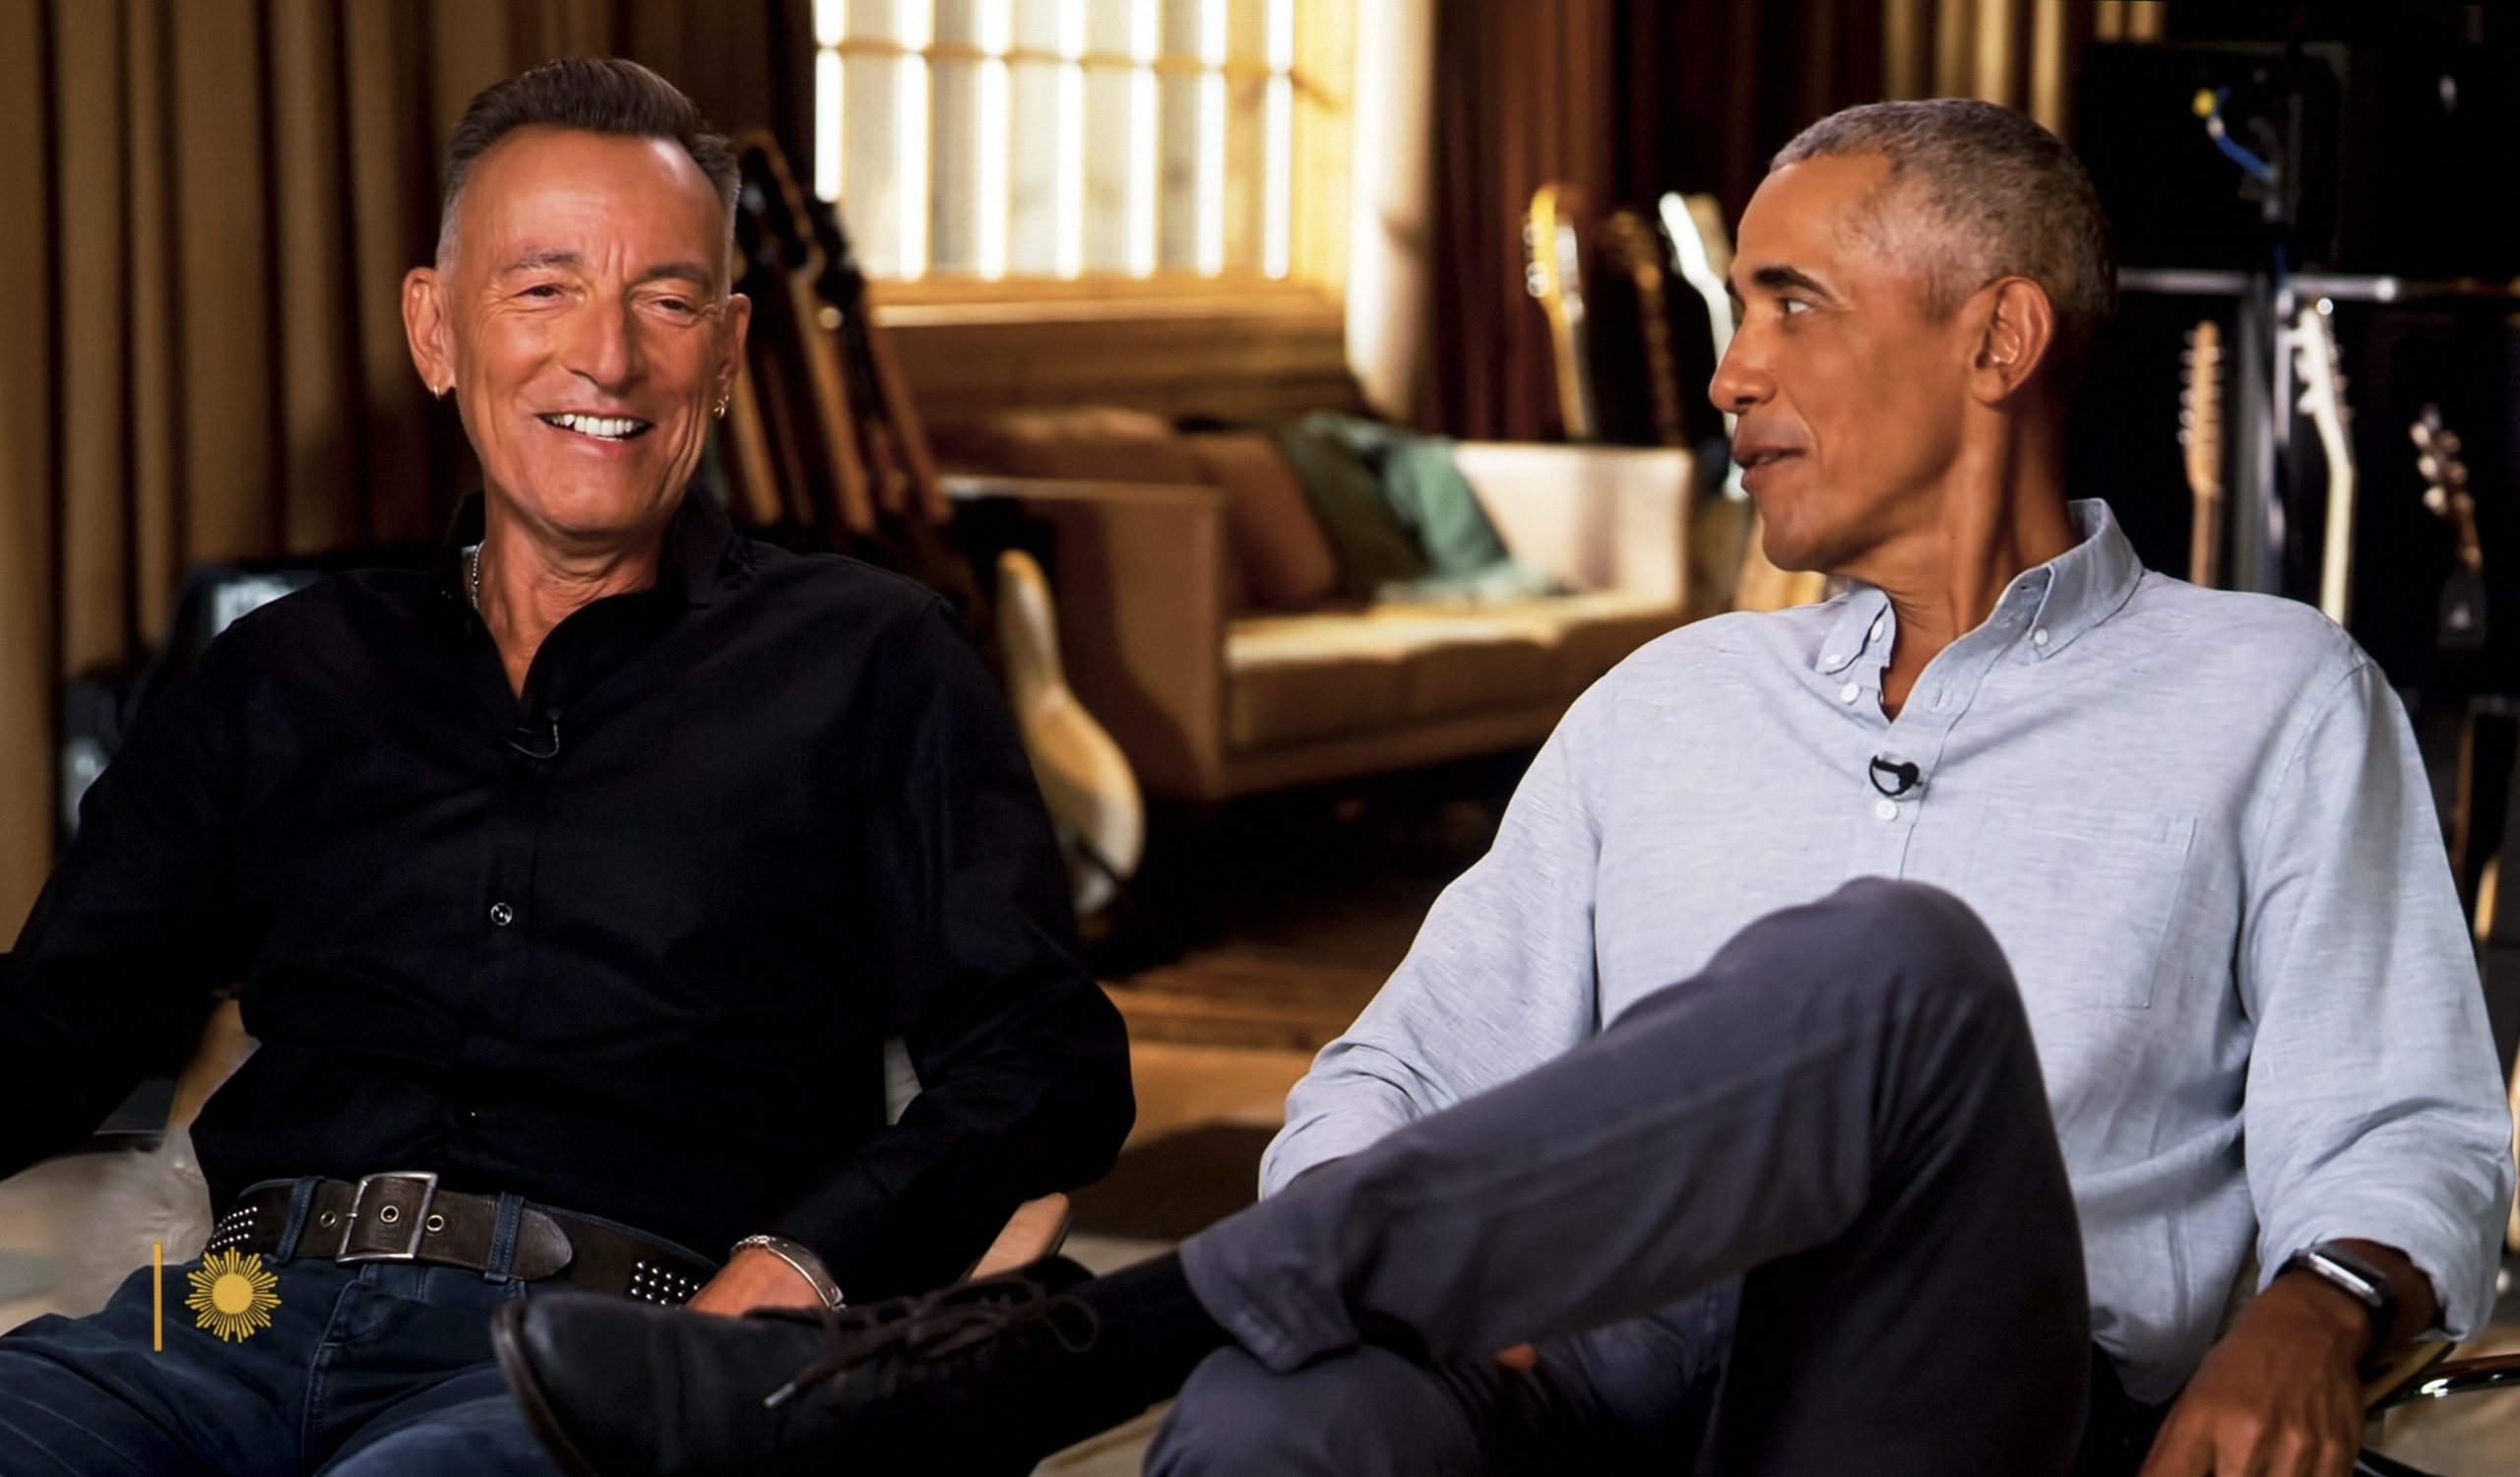 Barack Obama jetting into Spain's Barcelona for Bruce Springsteen concert